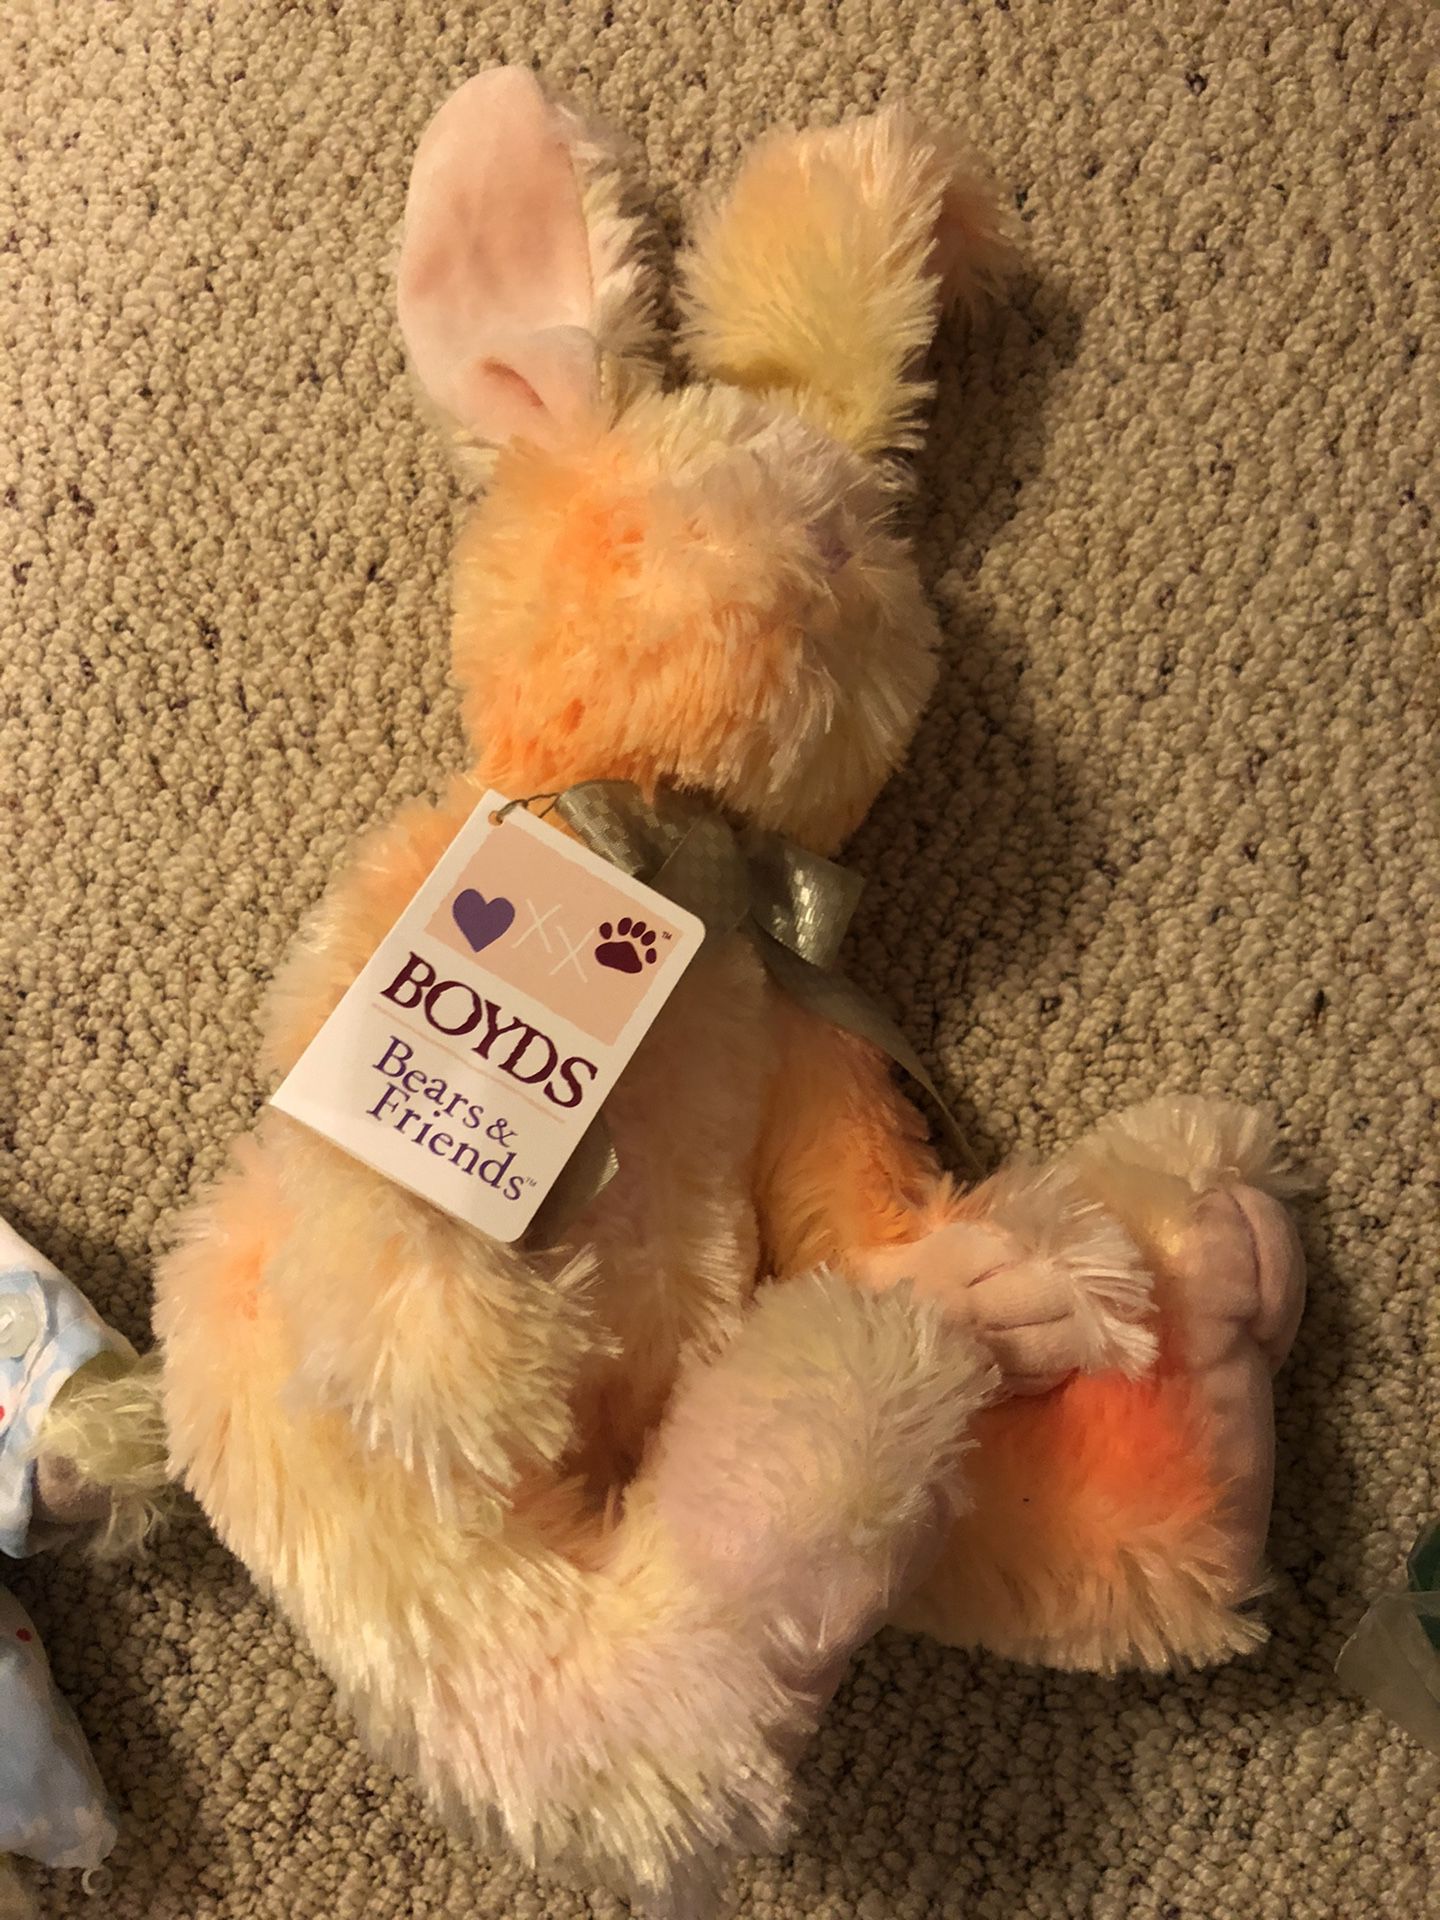 Boyd’s stuffed animals bunny and duck. NWT